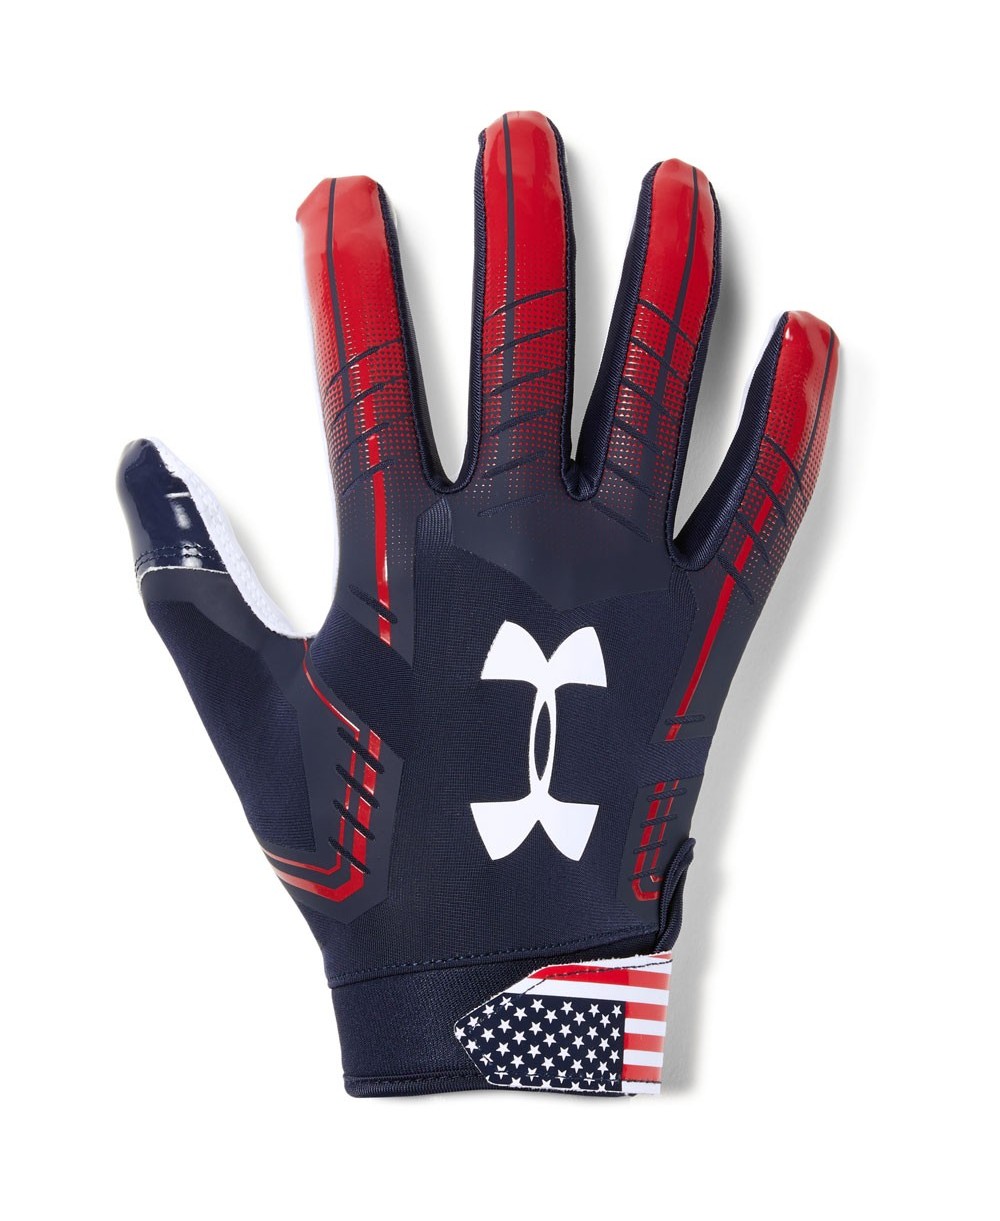 Under Armour F6 LE Men's American Football Gloves Midnight Navy/Roc...